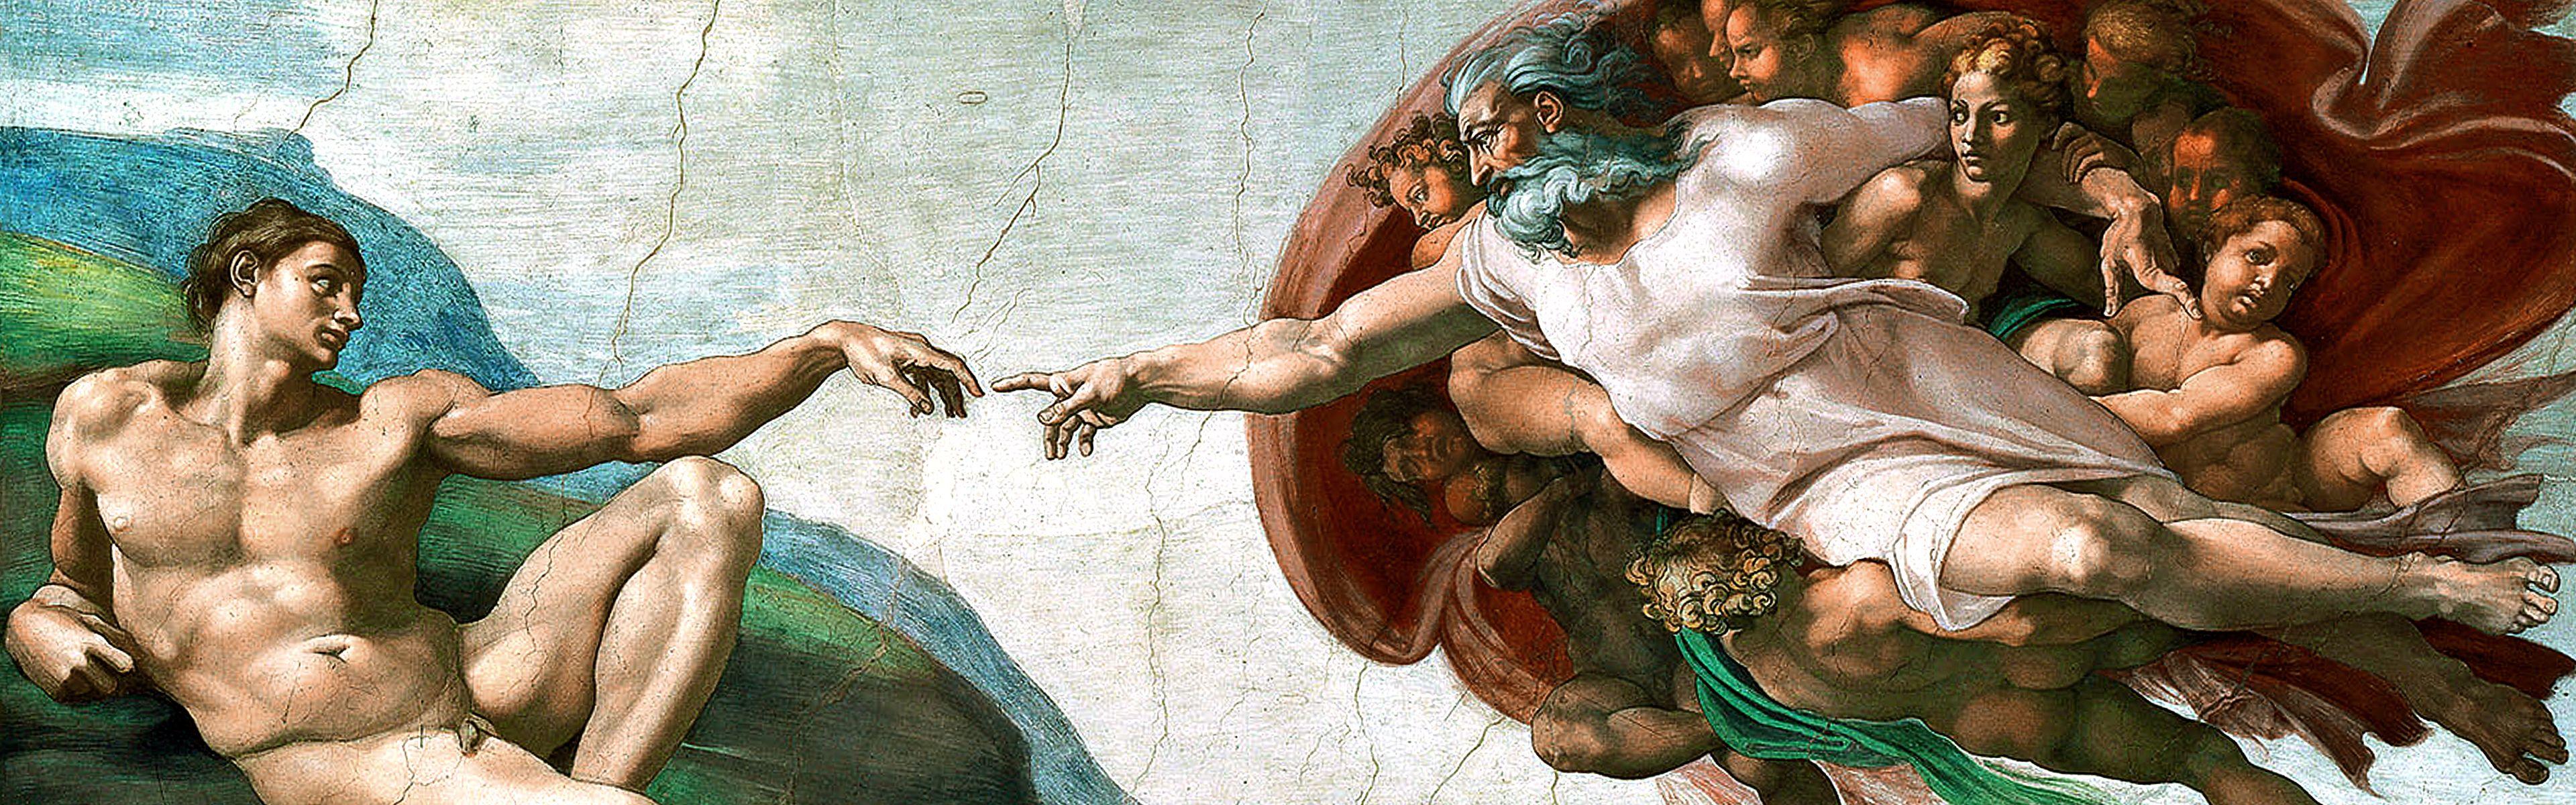 paintings, Michelangelo, The Creation of Adam, Sistine Chapel